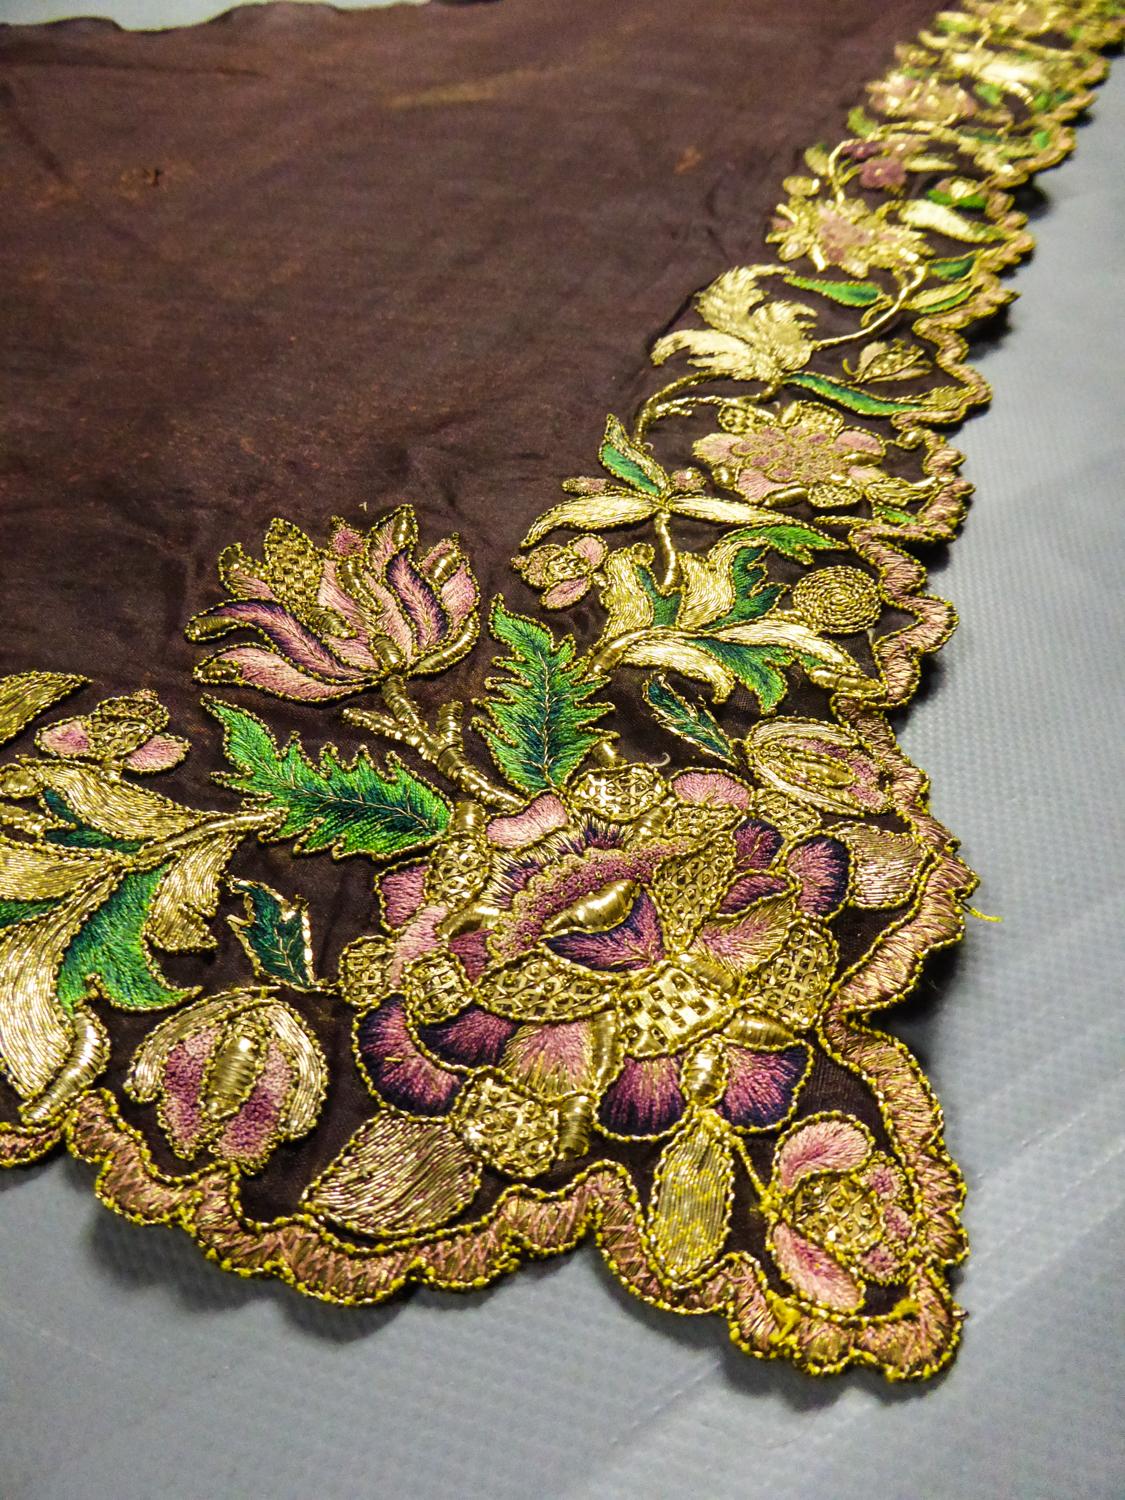 Black A gold and silk embroidered Fichu or Palatine Fichu Scarf - Europe - Circa 1700